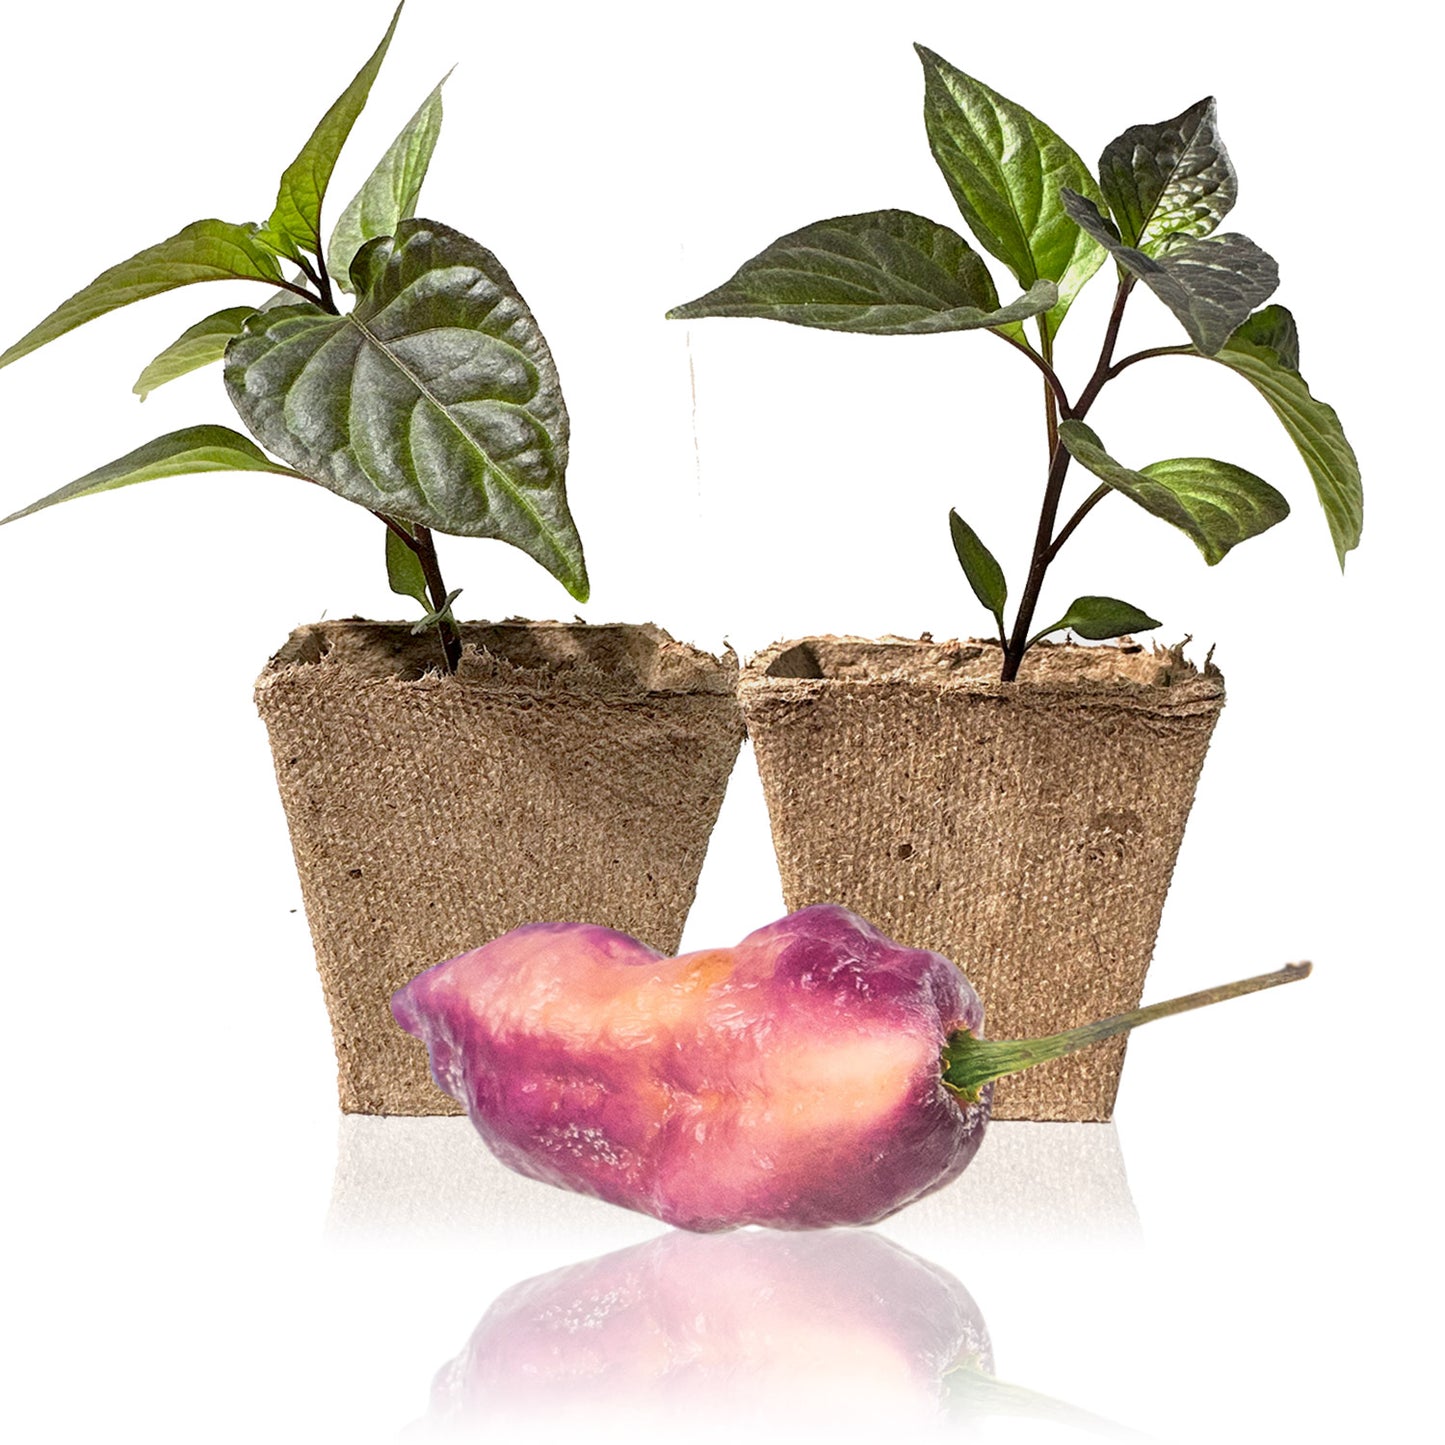 Pepper Joe's Pink Tiger Peach Bhut Jolokia pepper plants for sale